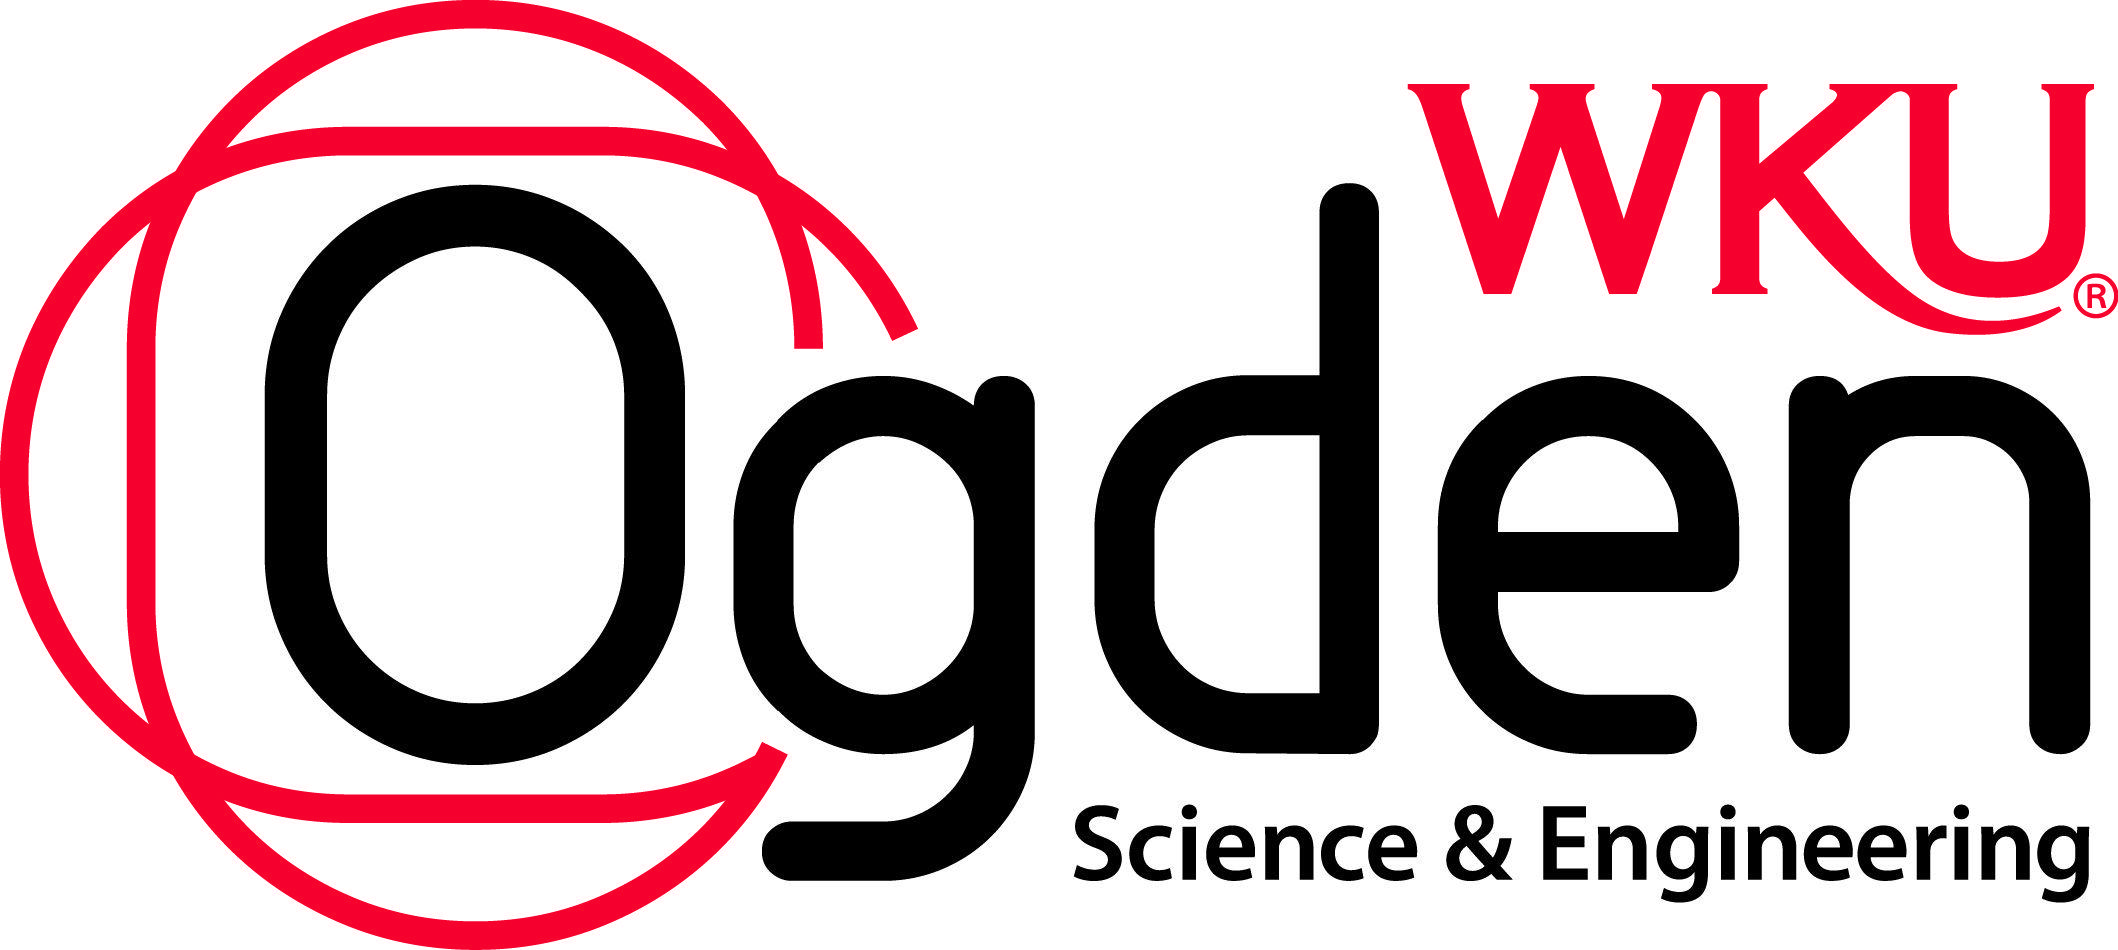 Red and Black College Logo - OCSE Logos. Western Kentucky University